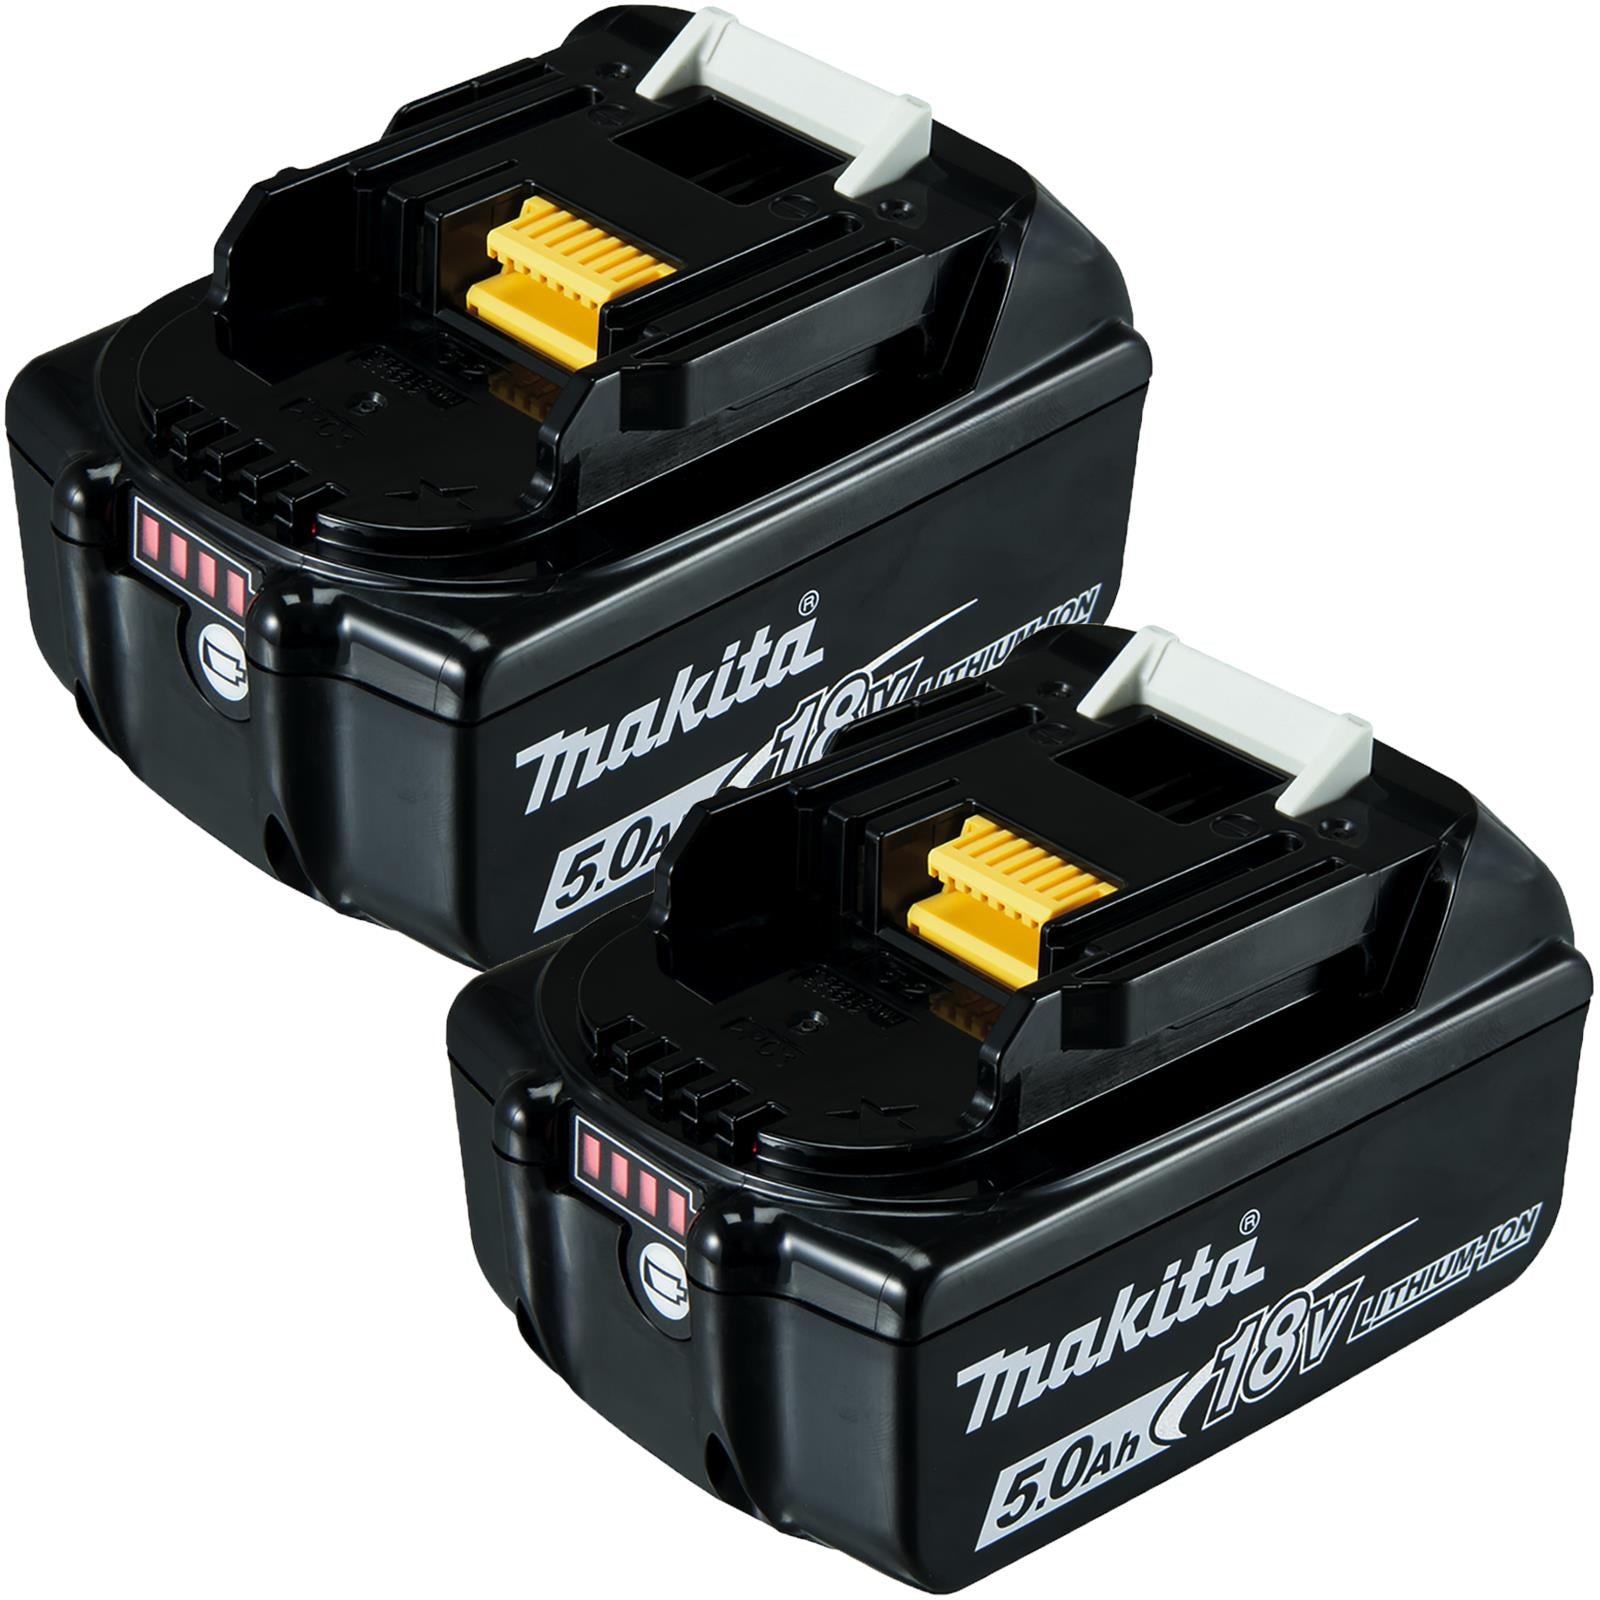 Makita Kettle Battery Powered for Worksites Cordless 18V x 2 LXT DKT360Z  Body Only